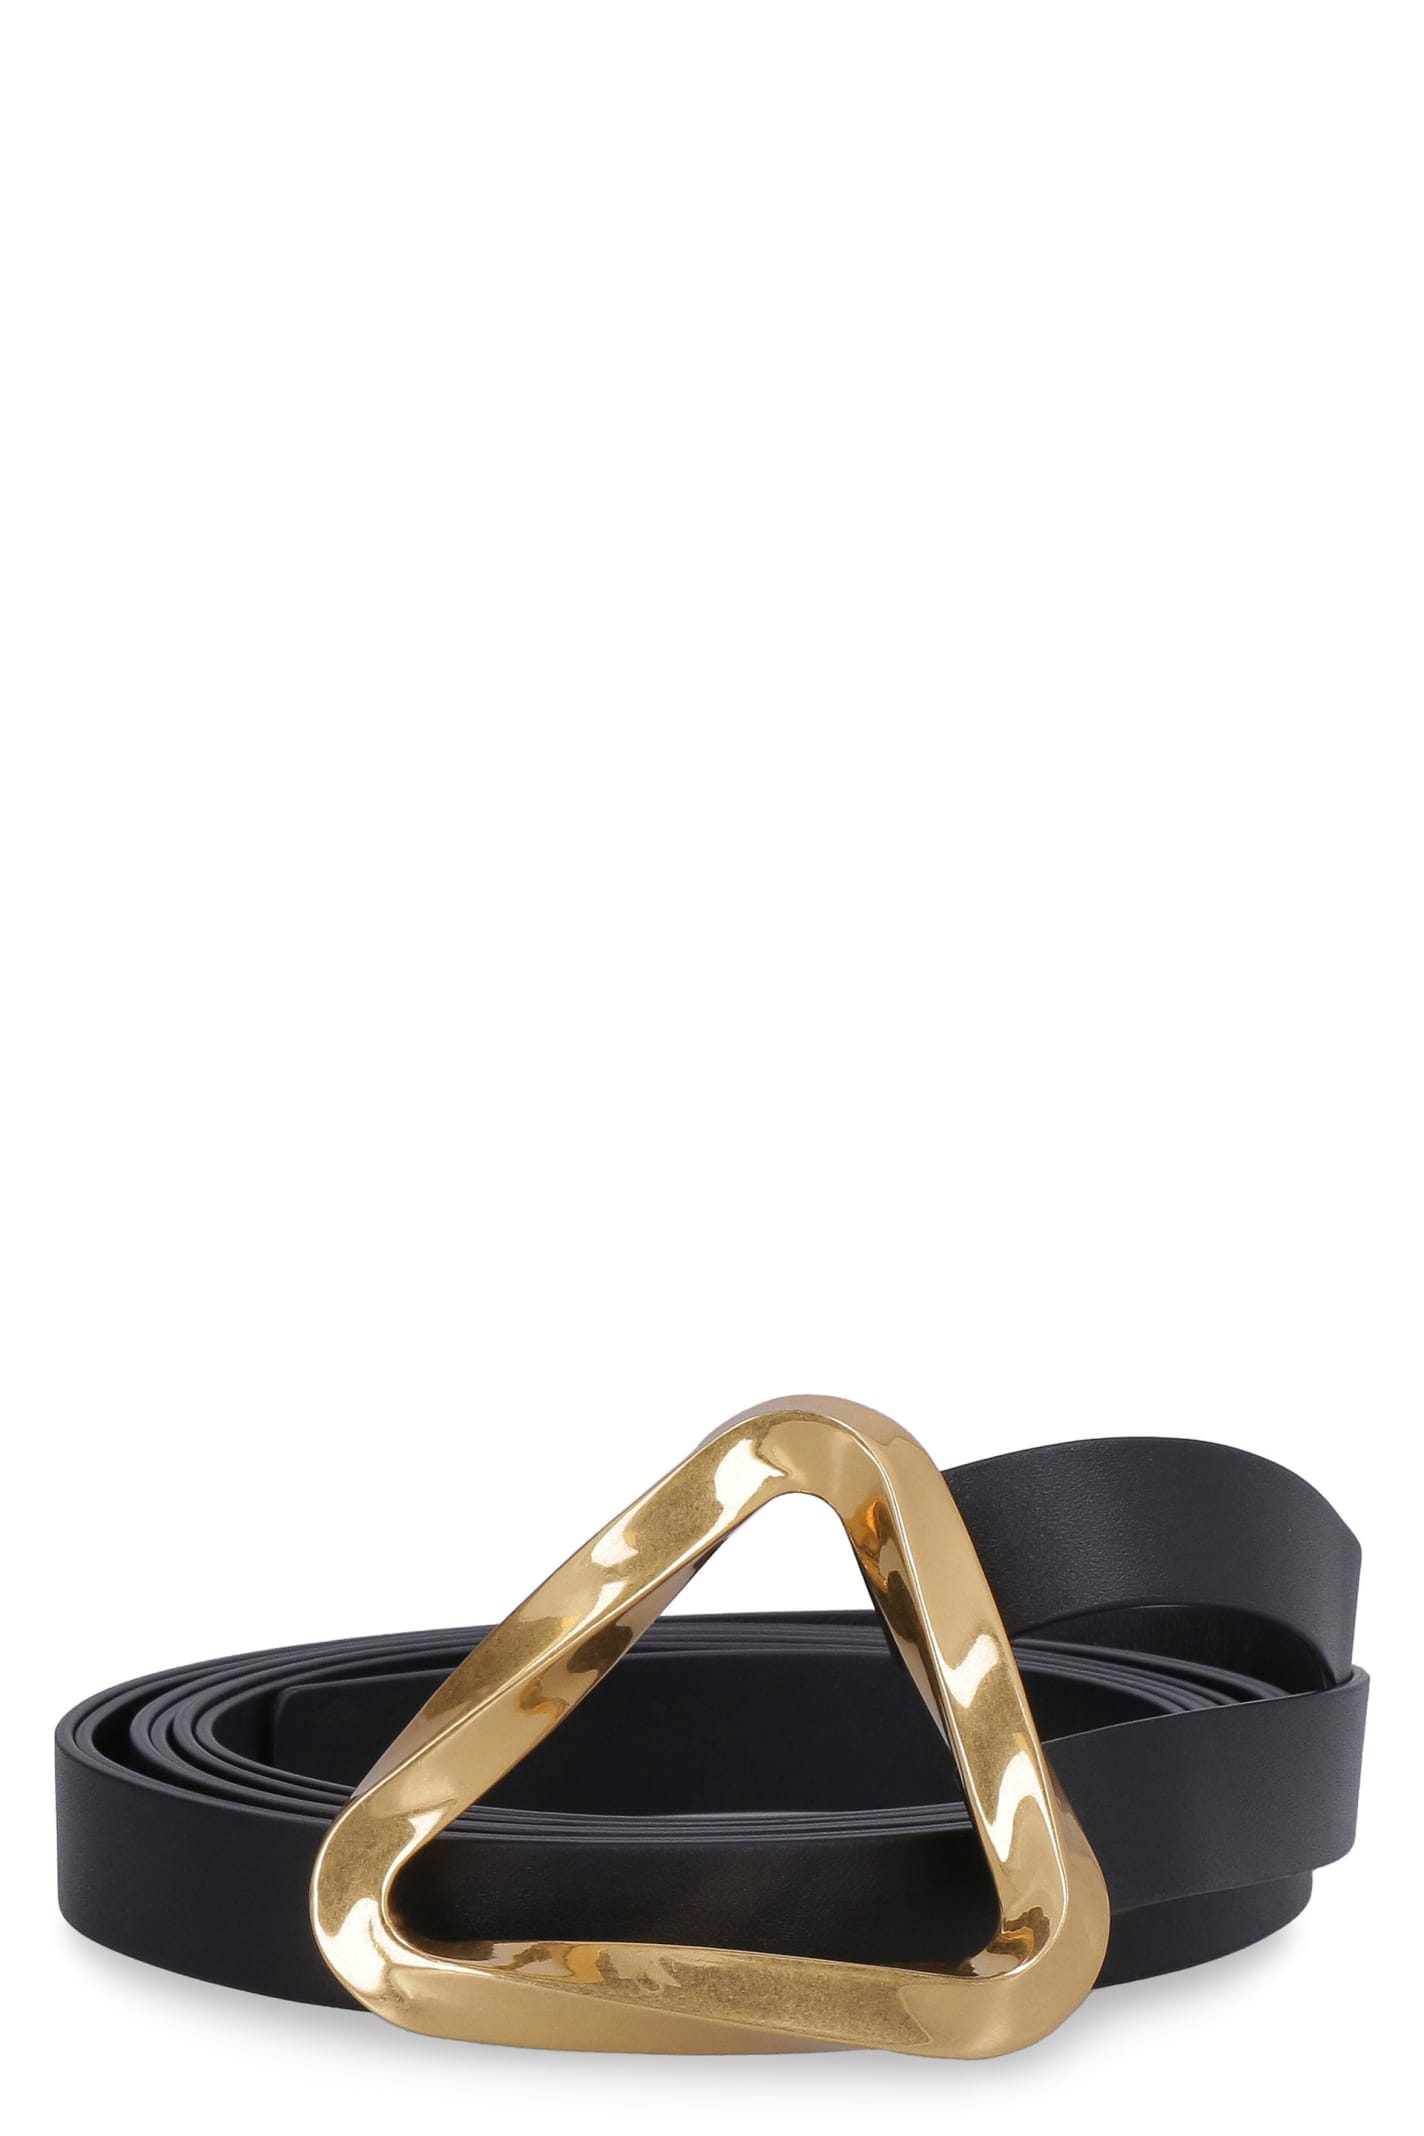 Bottega Veneta Grasp Leather Double Strap Belt